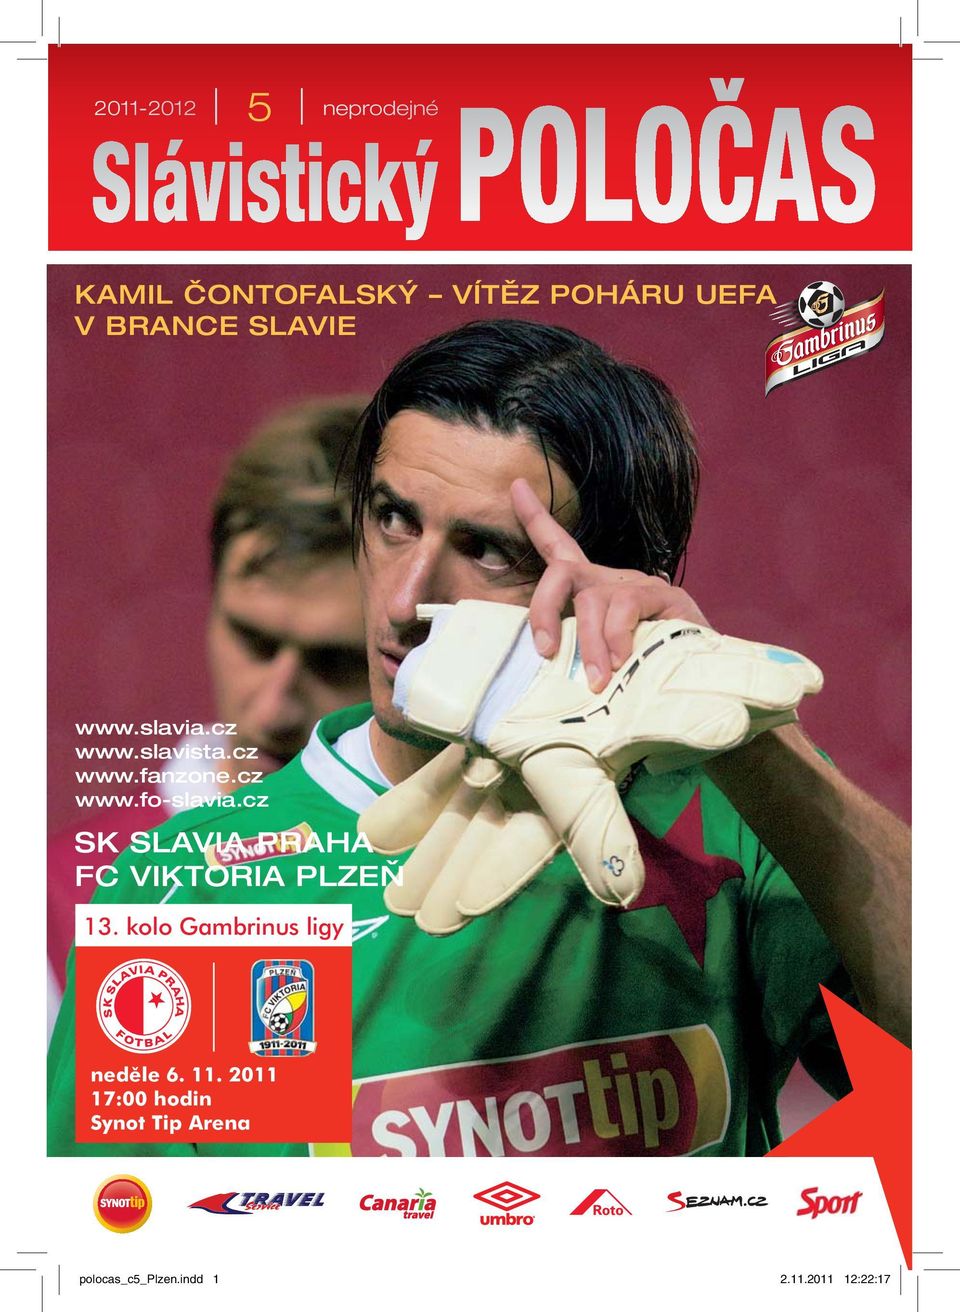 cz SK SLAVIA PRAHA FC VIKTORIA PLZEŇ 13. kolo Gambrinus ligy neděle 6.